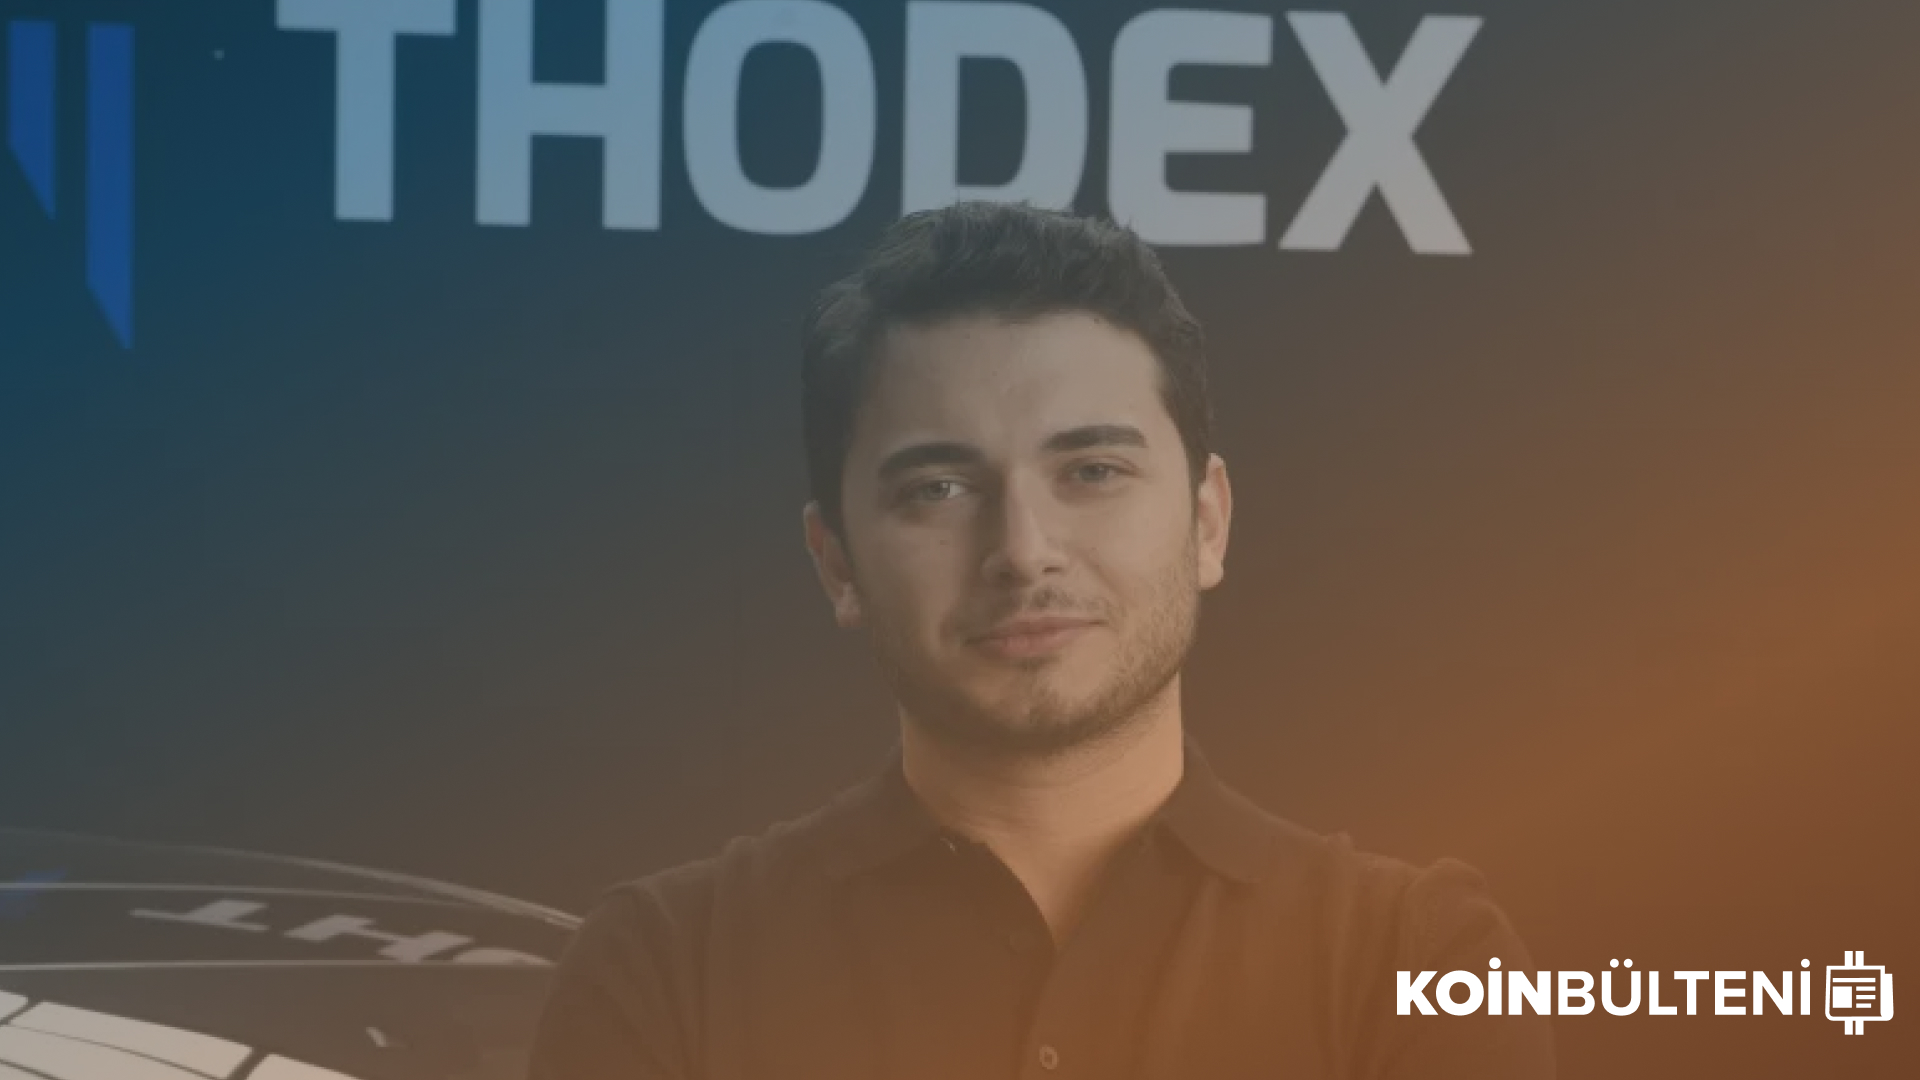 thodex-kripto-para-borsa-bitcoin-faruk-fatih-ozer